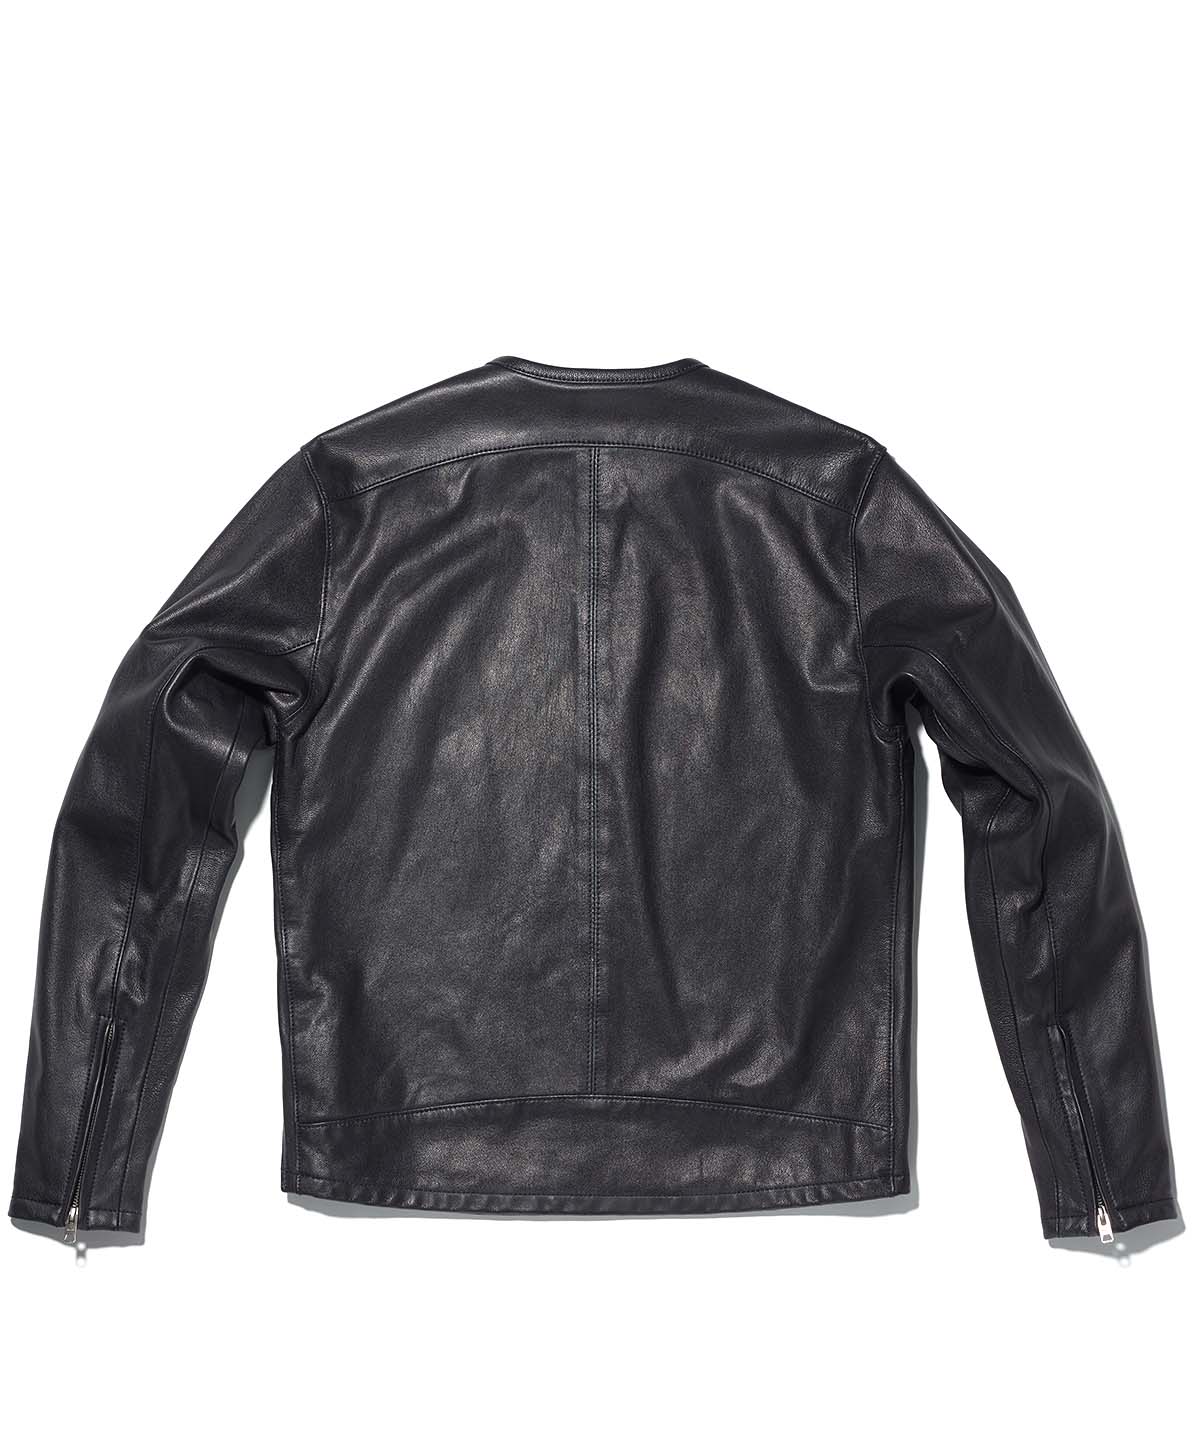 90s pullover design leather jkt レザージャケット ...